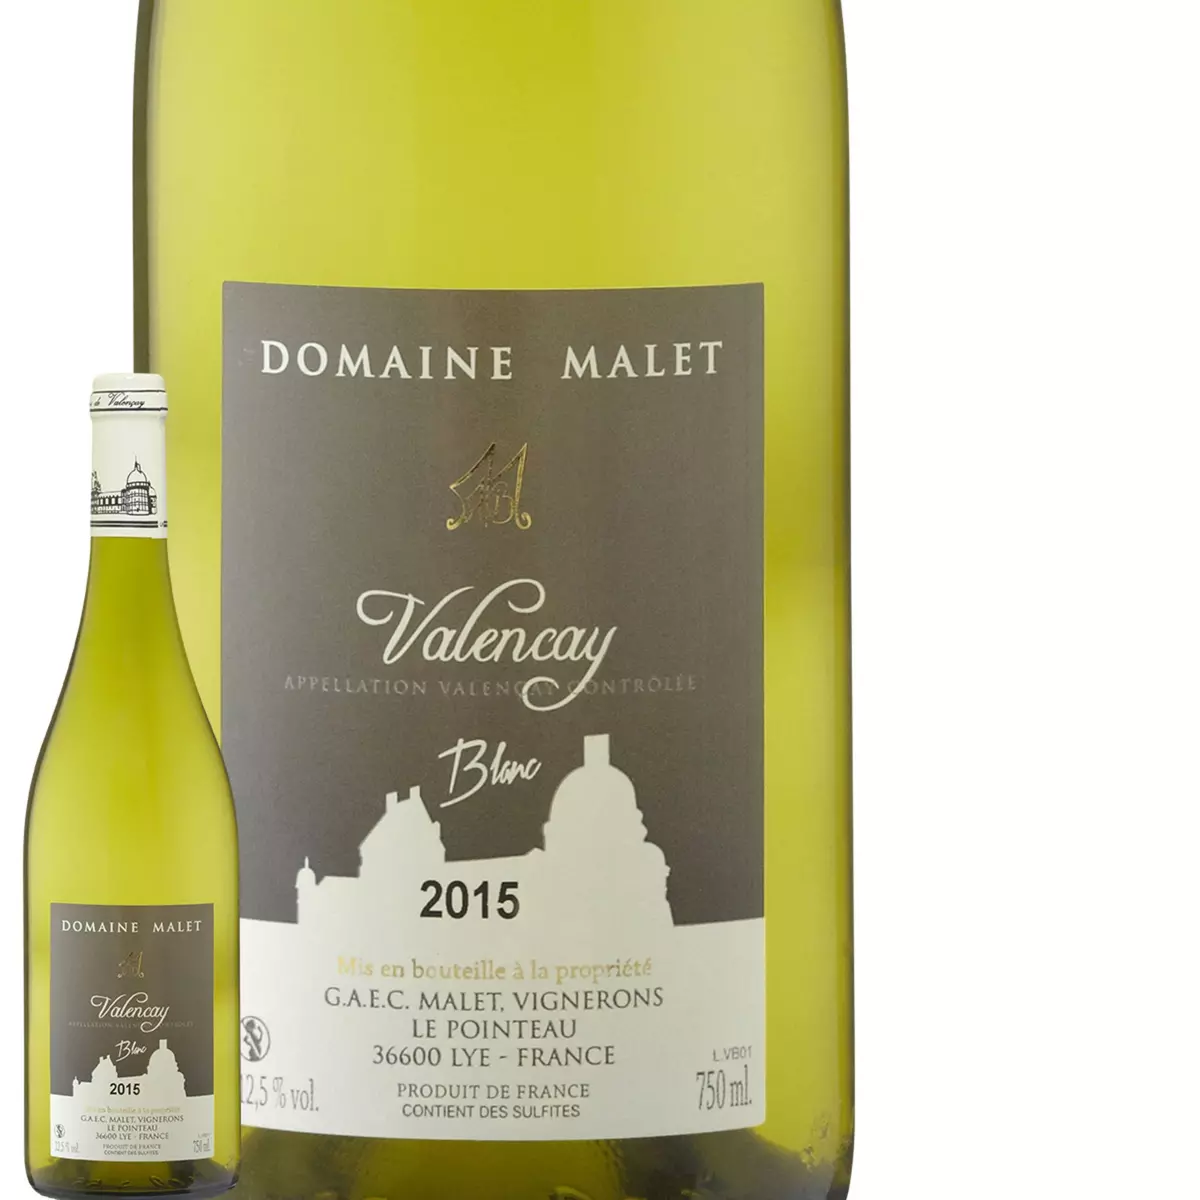 Domaine Malet Valencay Blanc 2015